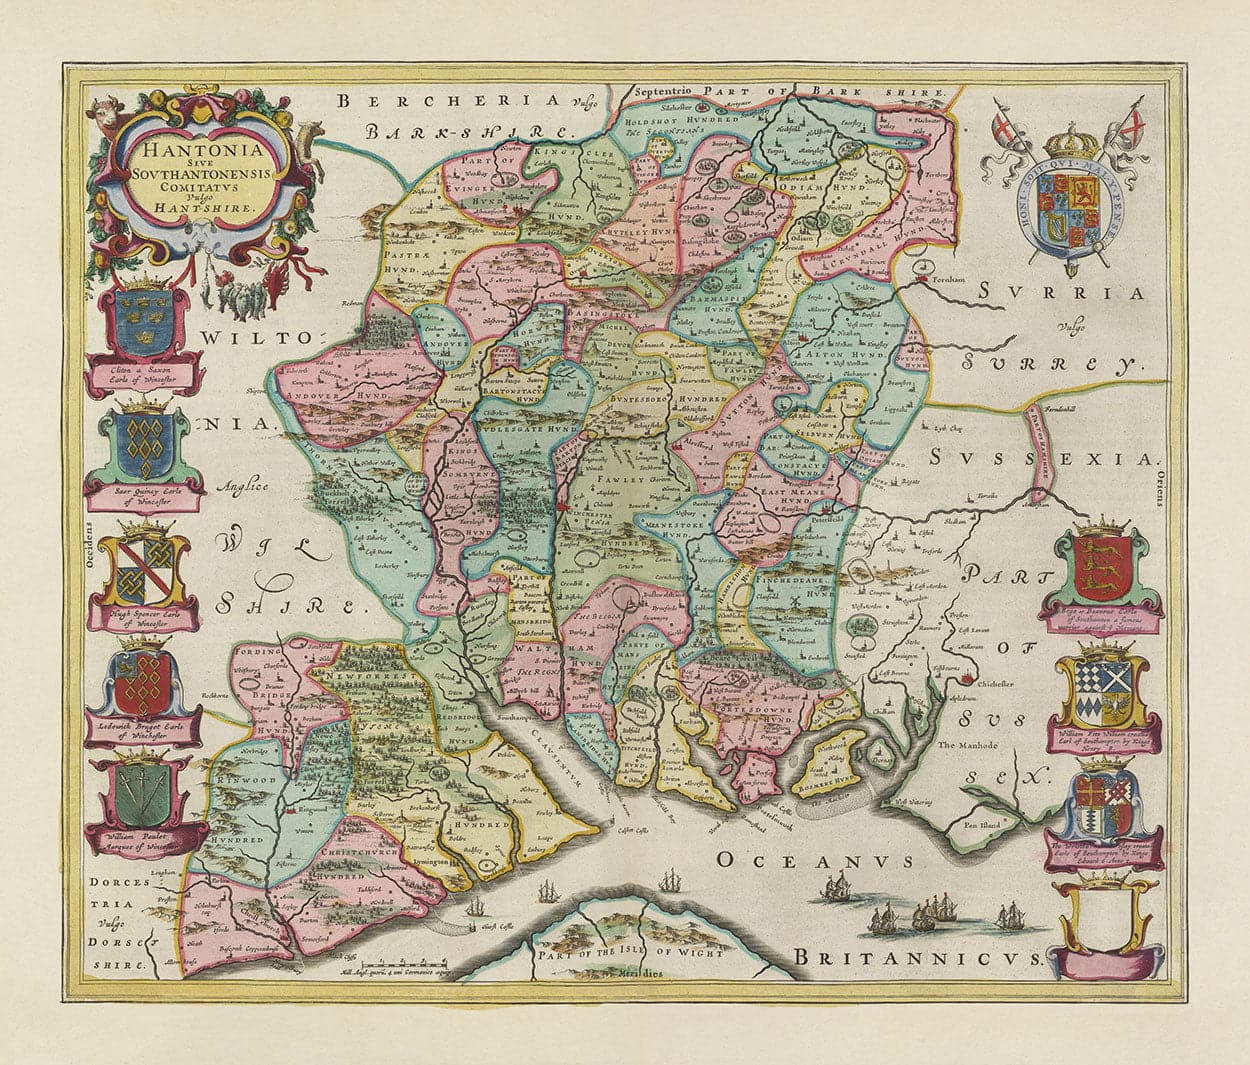 Old Map of Hampshire, 1665 by Joan Blaeu - Winchester, Portsmouth, Southampton, Basingstoke, Farnborough, Havant